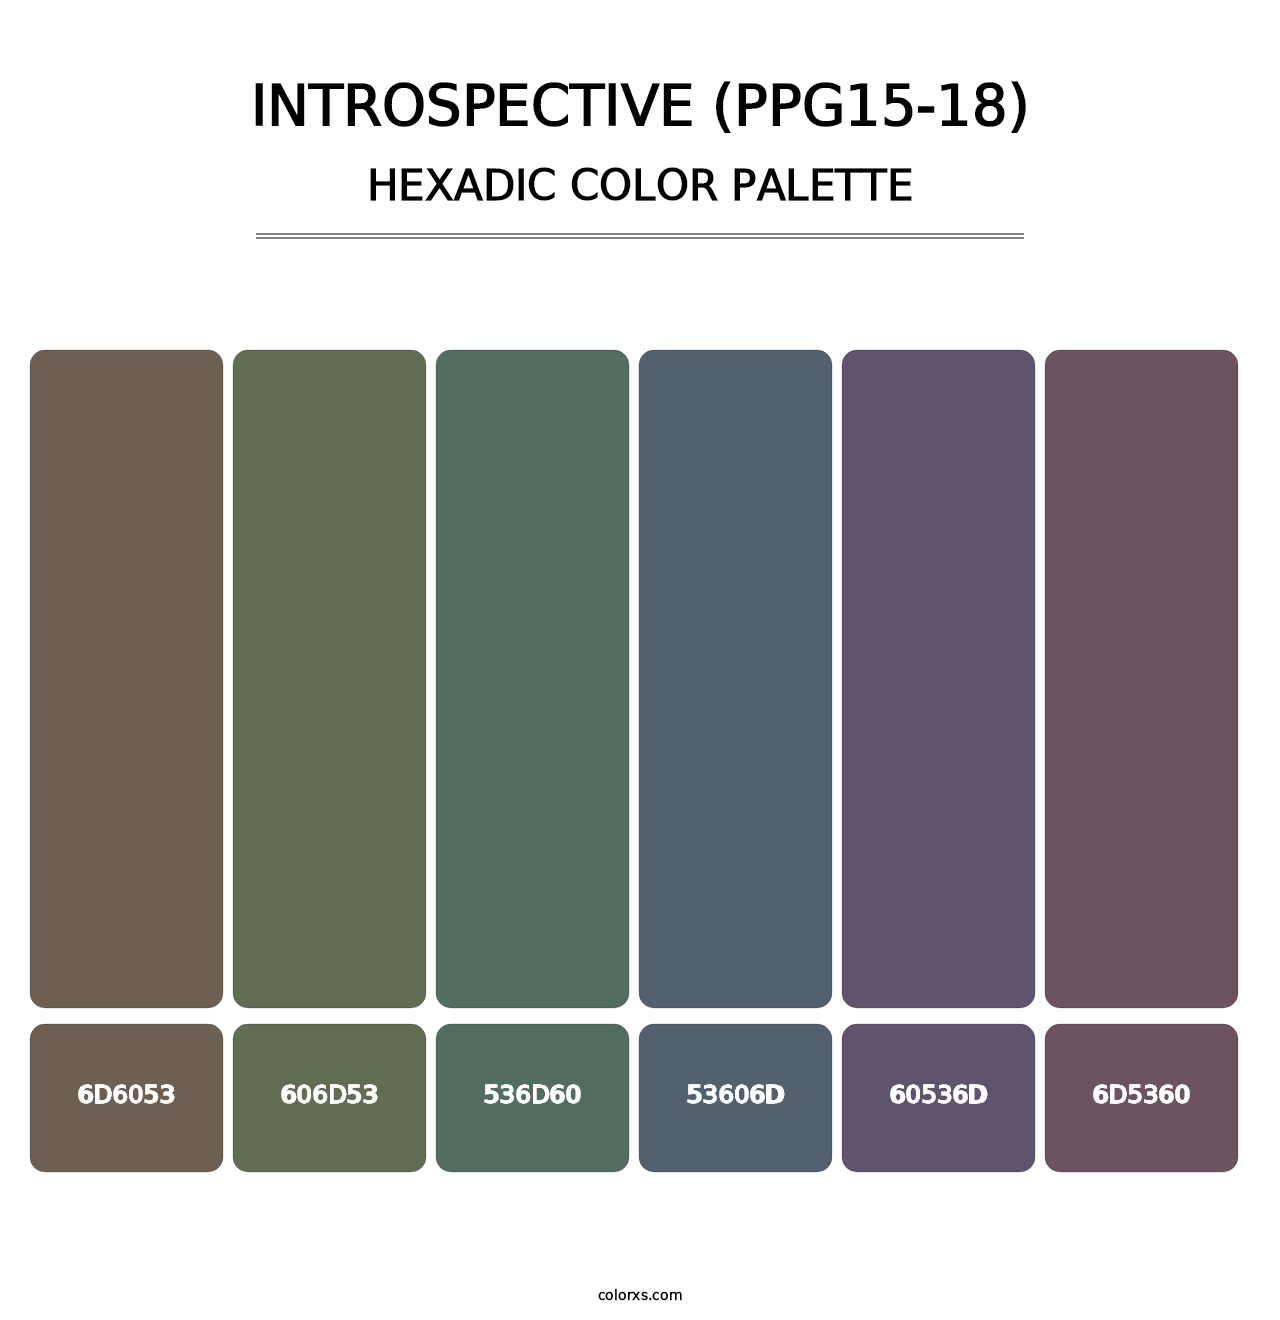 Introspective (PPG15-18) - Hexadic Color Palette